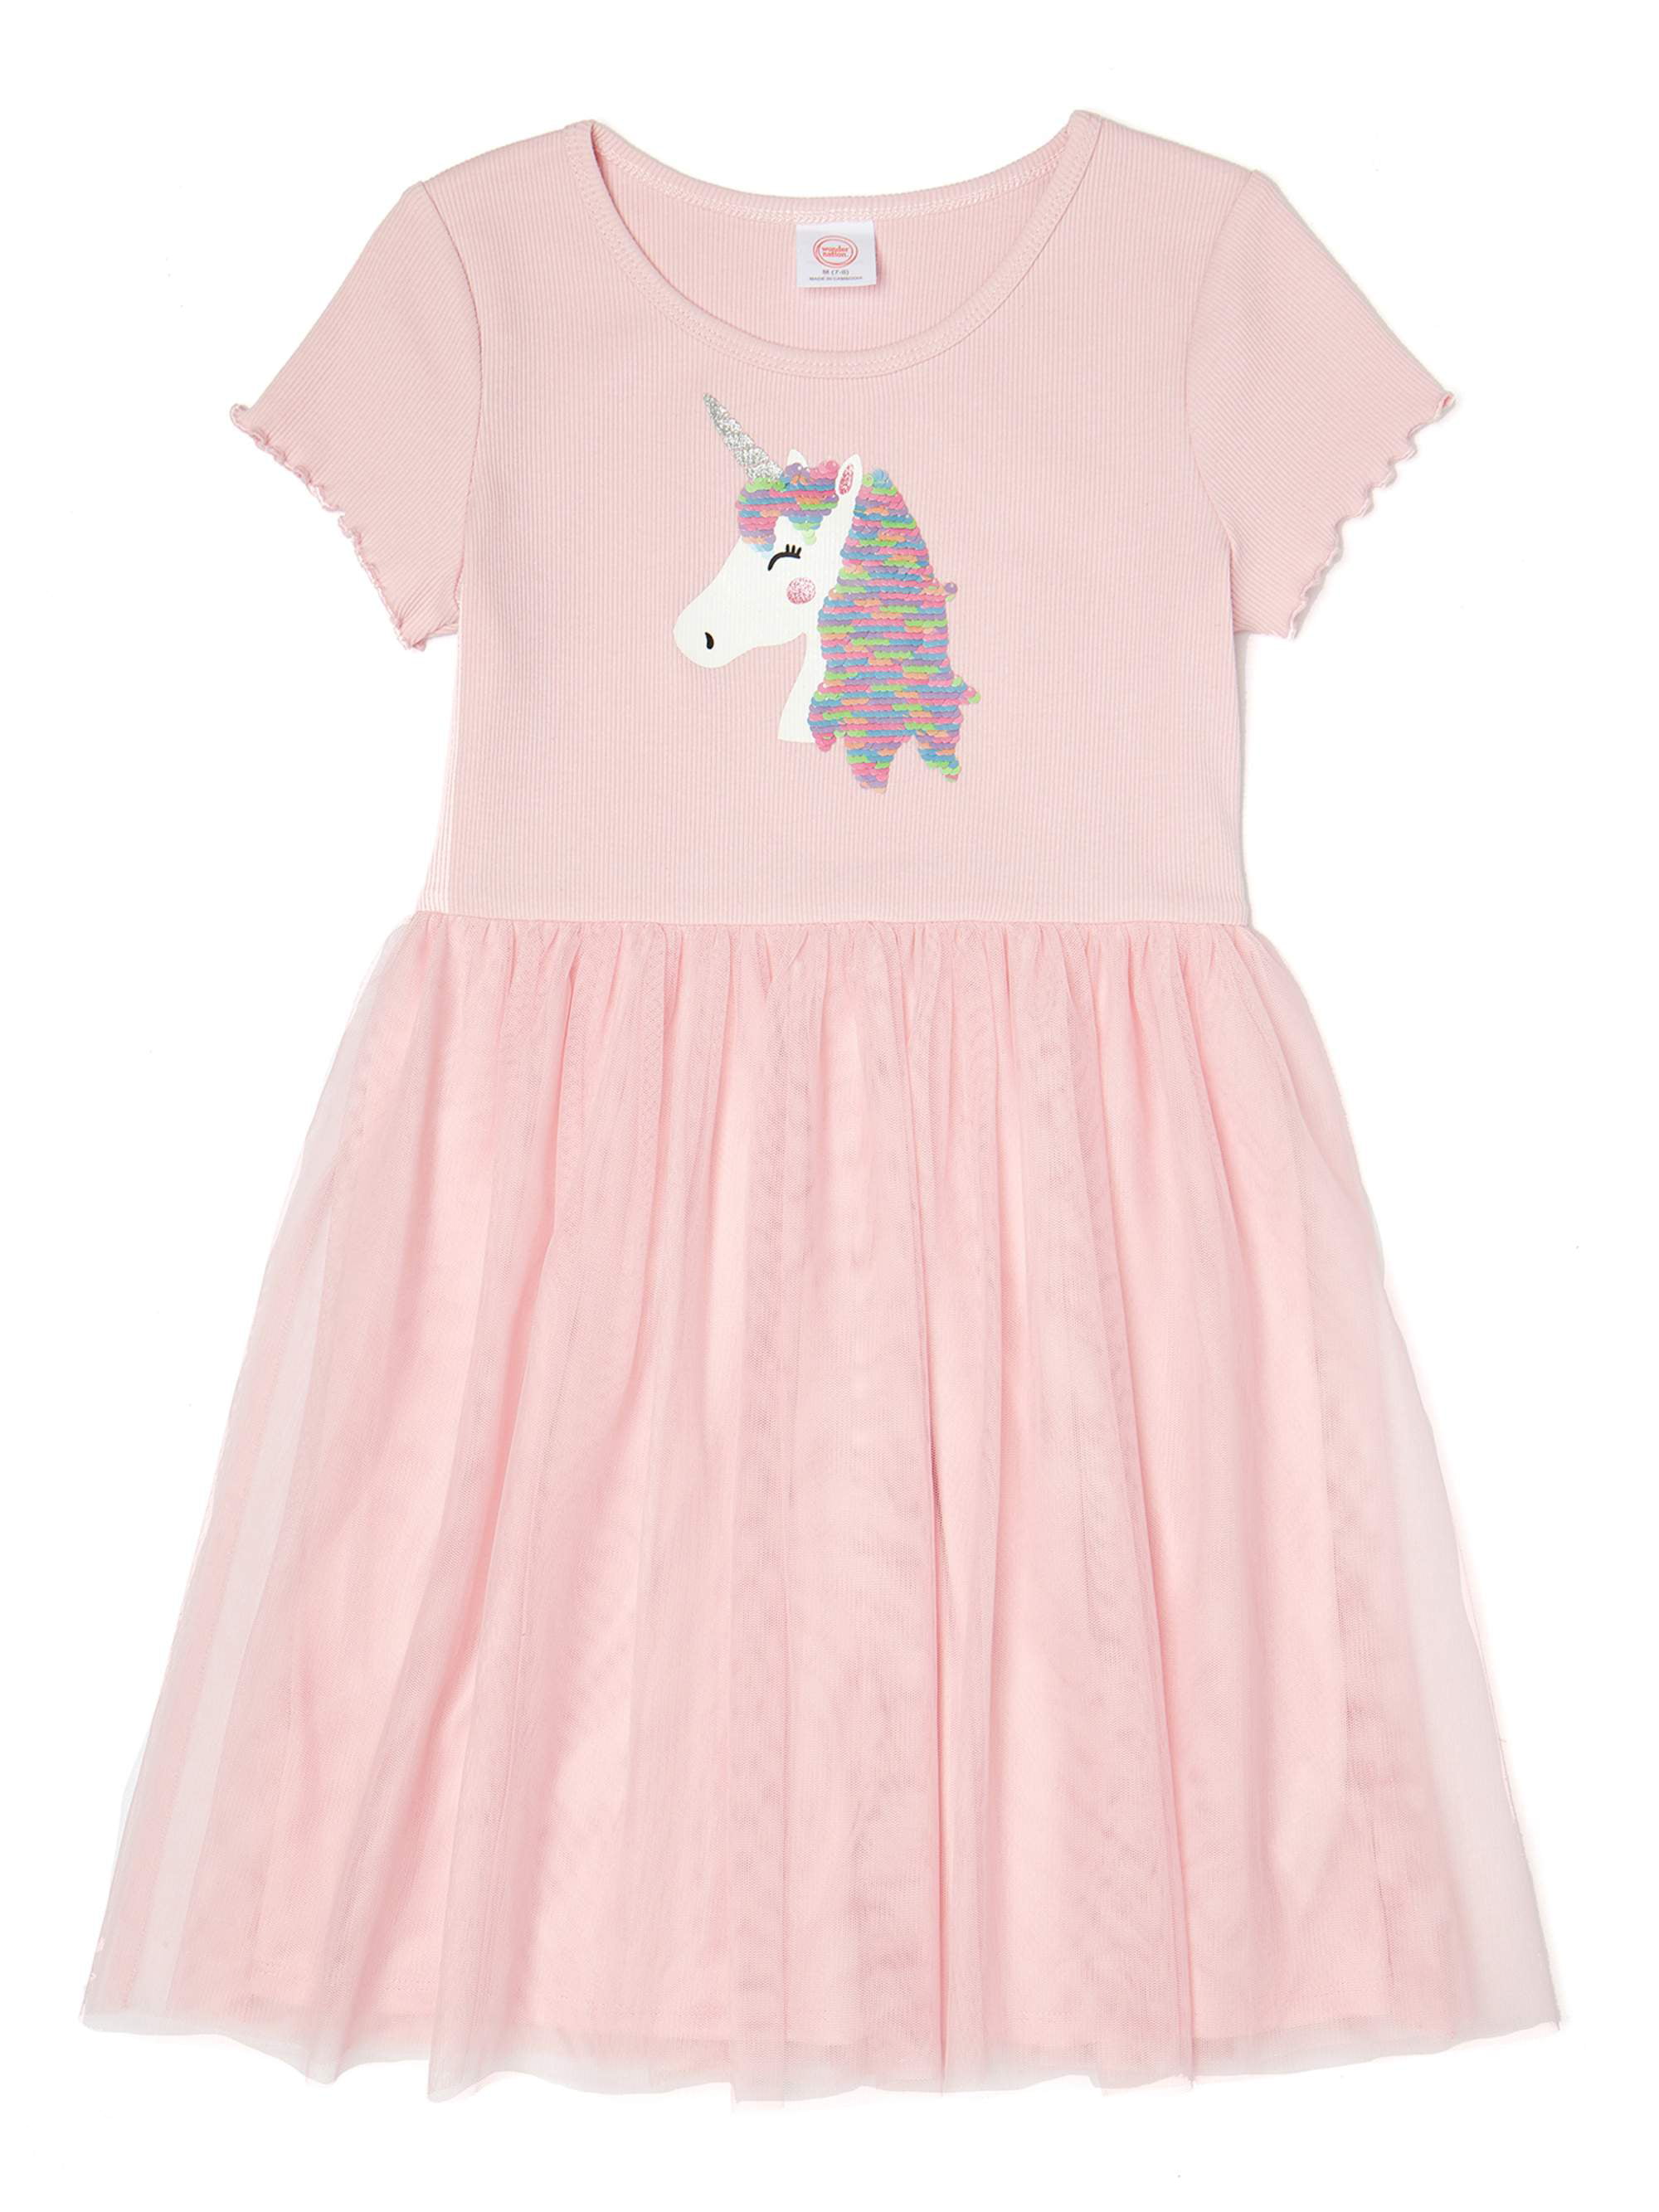 Wonder Nation Girl's Unicorn Graphic Applique T-Shirt & Skirt Set/2 Sz 14-16 NEW 